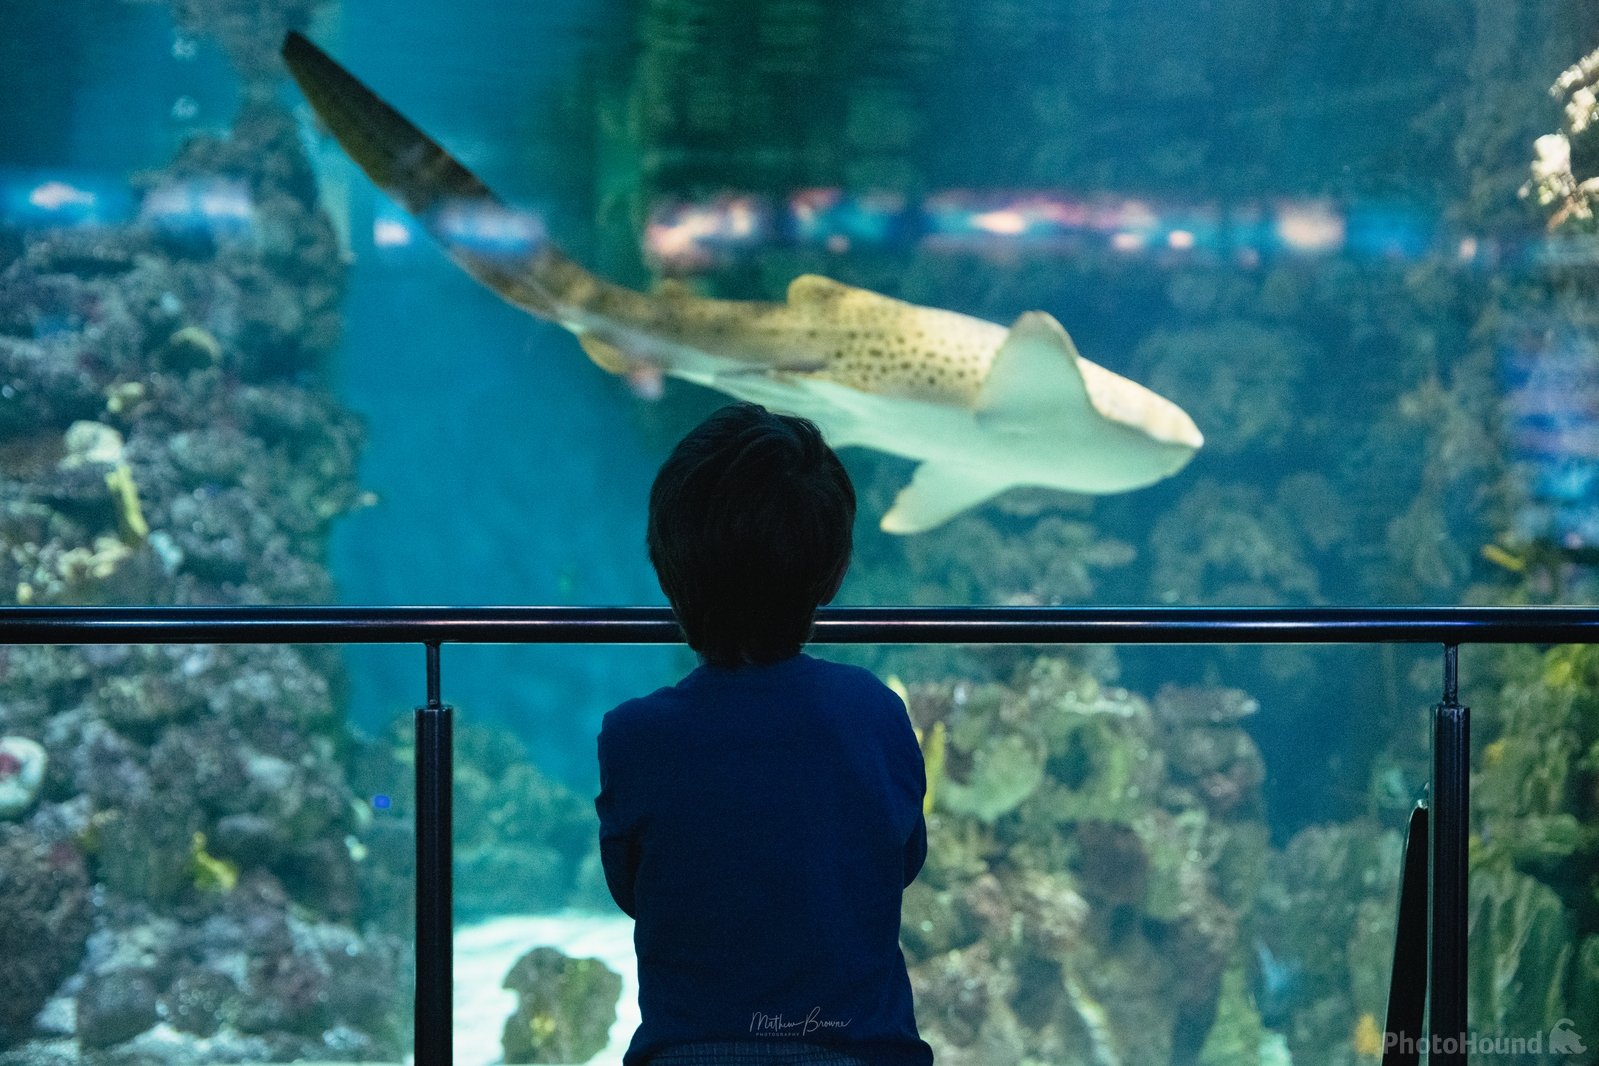 Image of Barcelona Aquarium by Mathew Browne